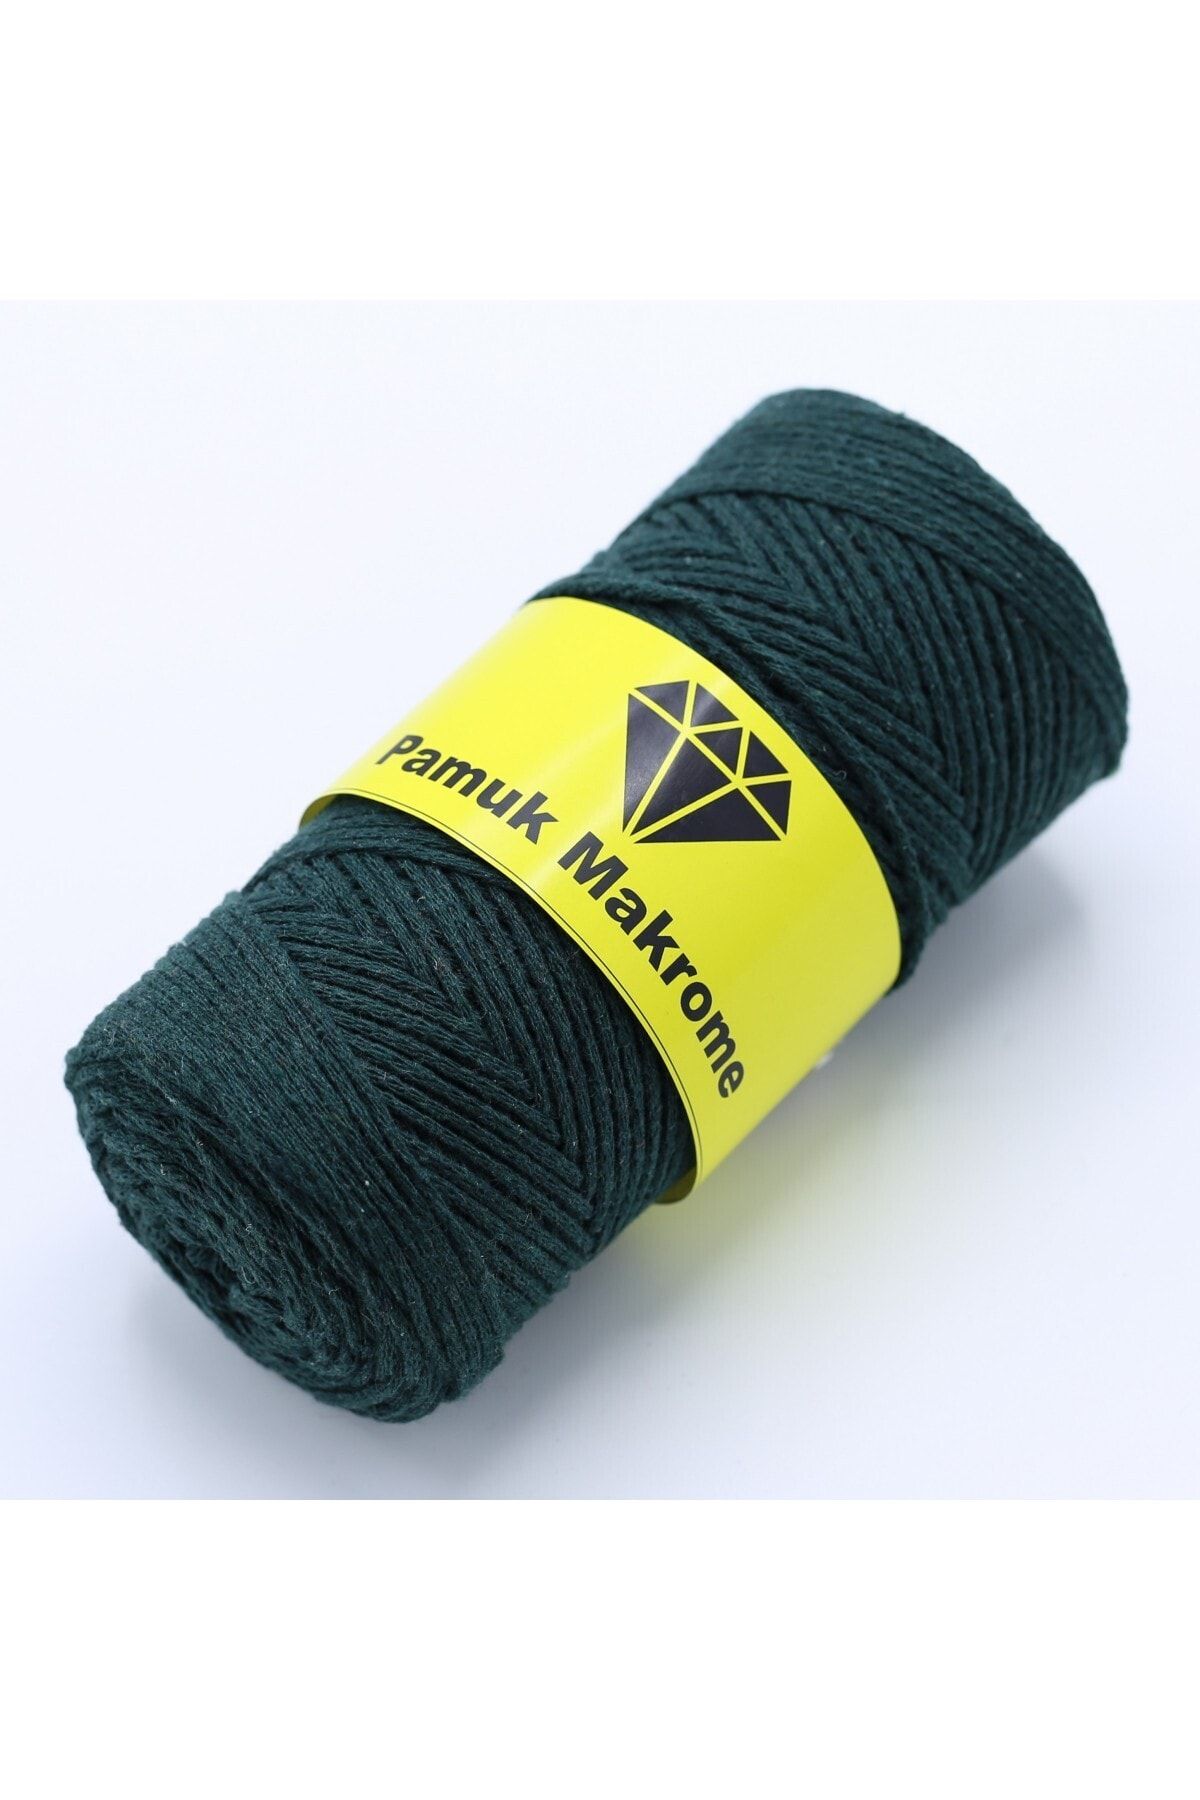 Neon Green Macrame Cord,2mm Green Cotton Cord for Macrame,macrame